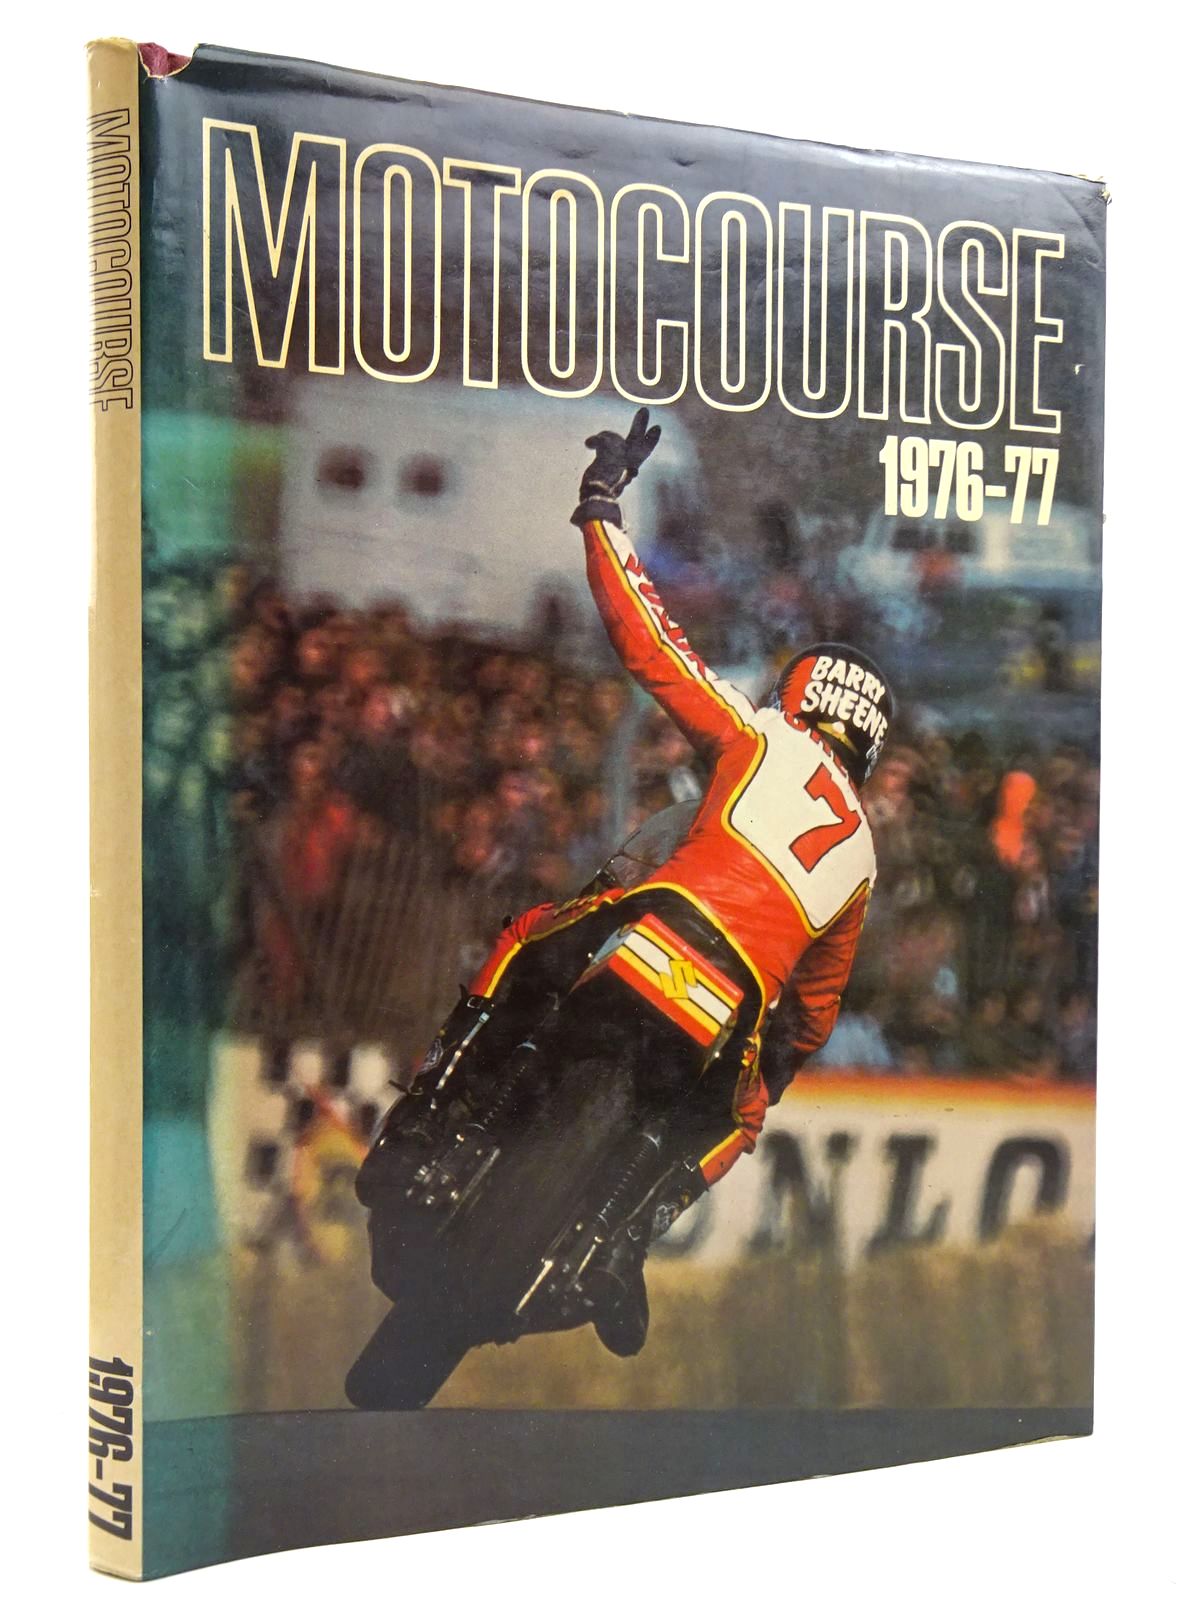 Motocourse 1976-77